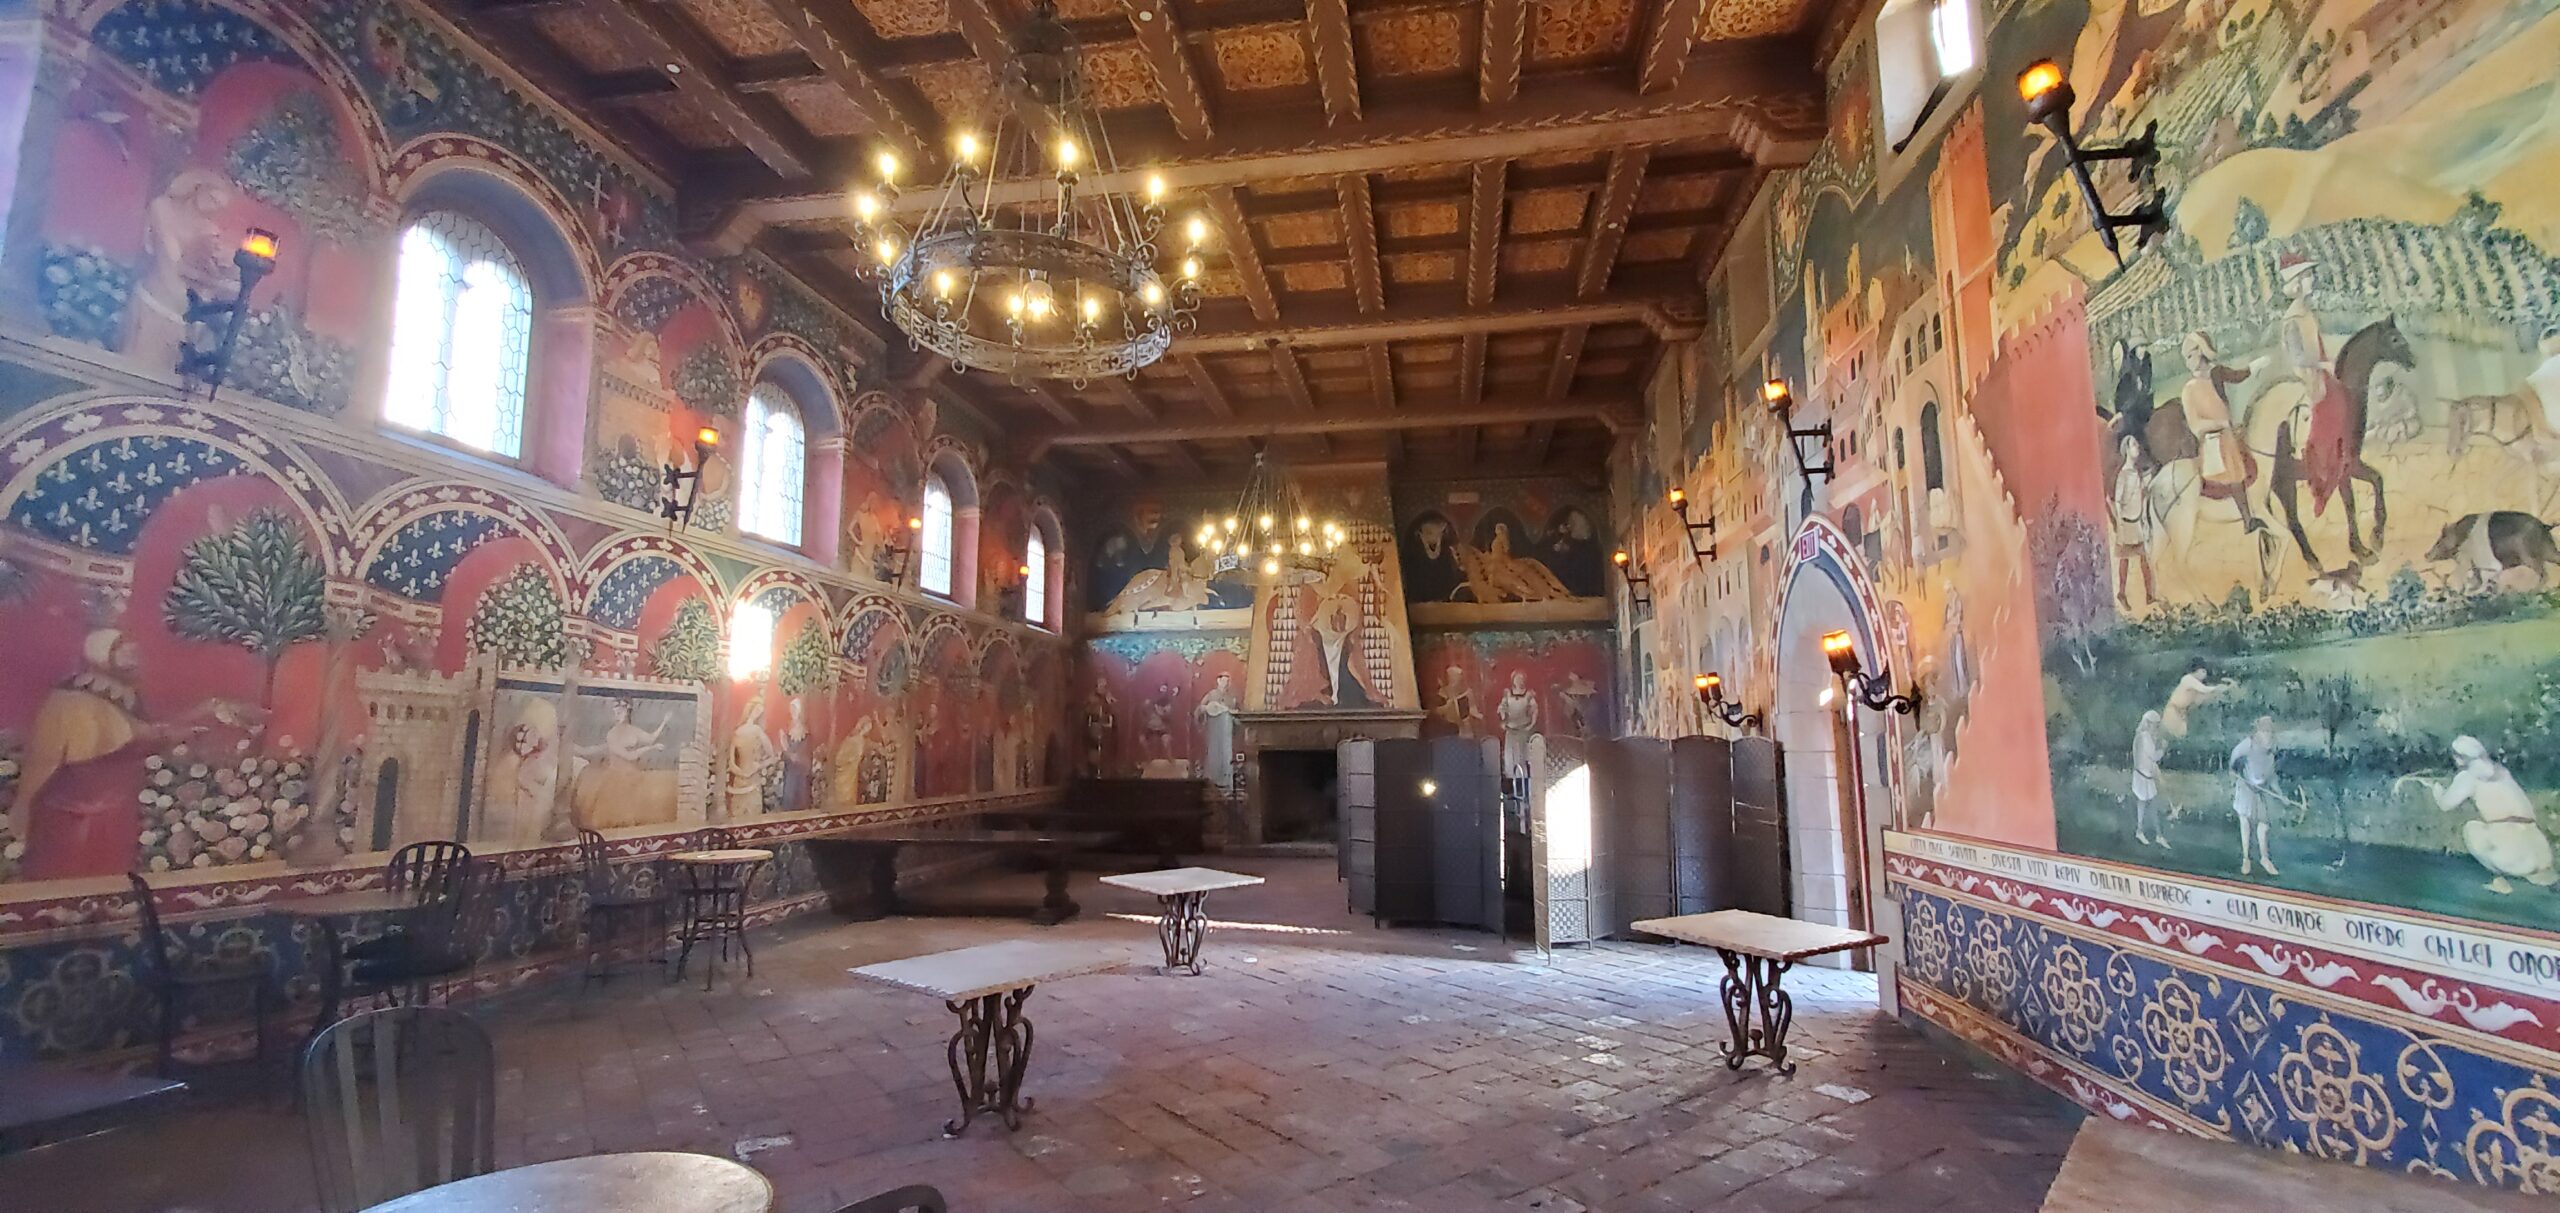 Frescoes and additional castle space inside Castello di Amorosa.